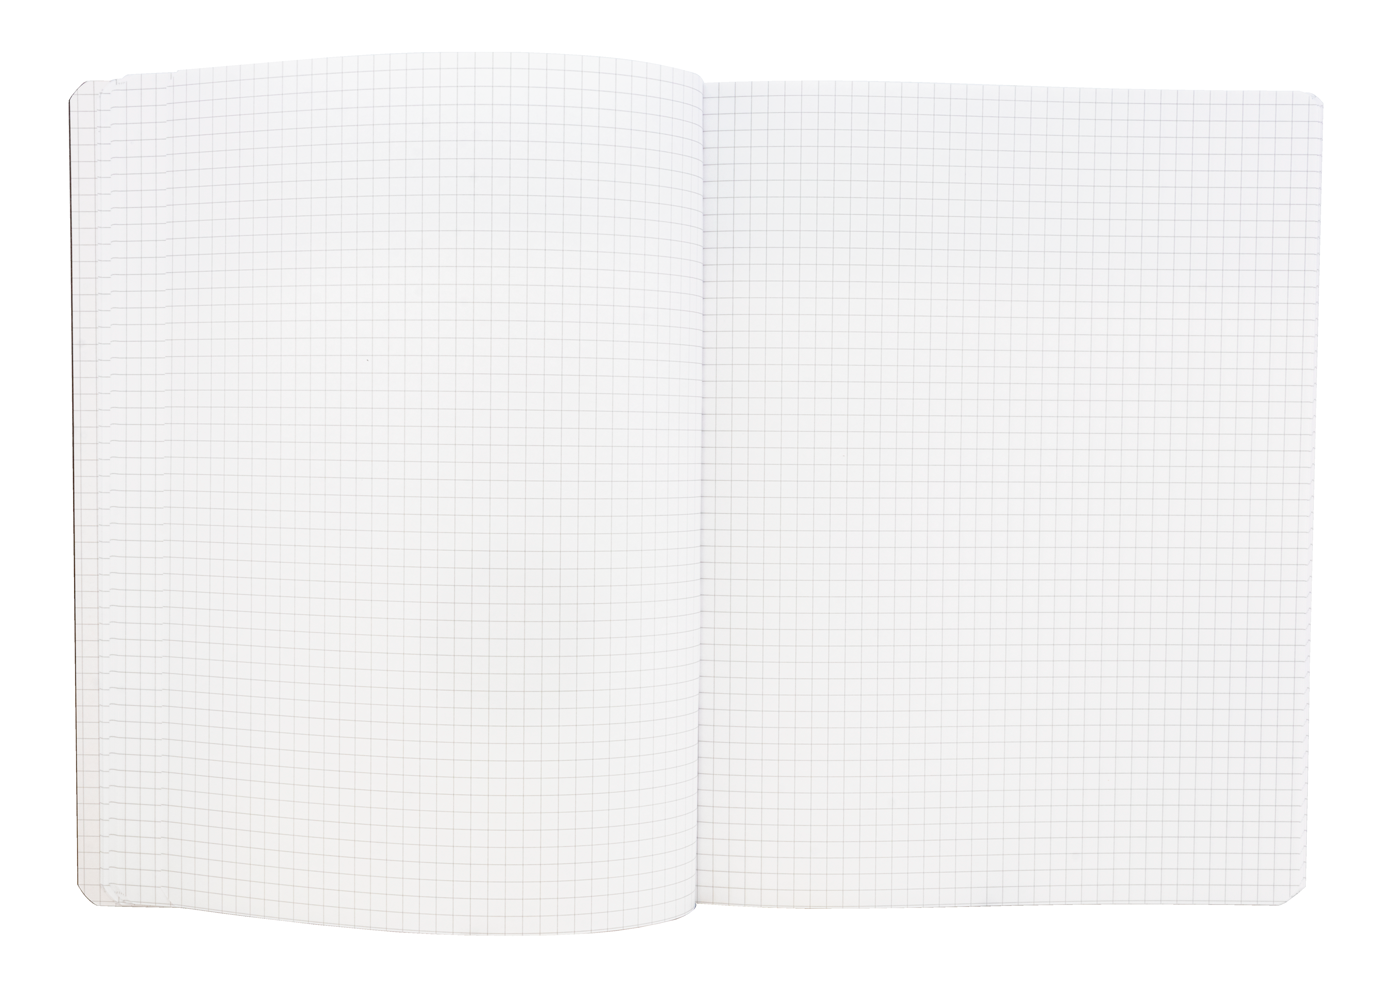 Rhodia Composition Notebook Black - Grid